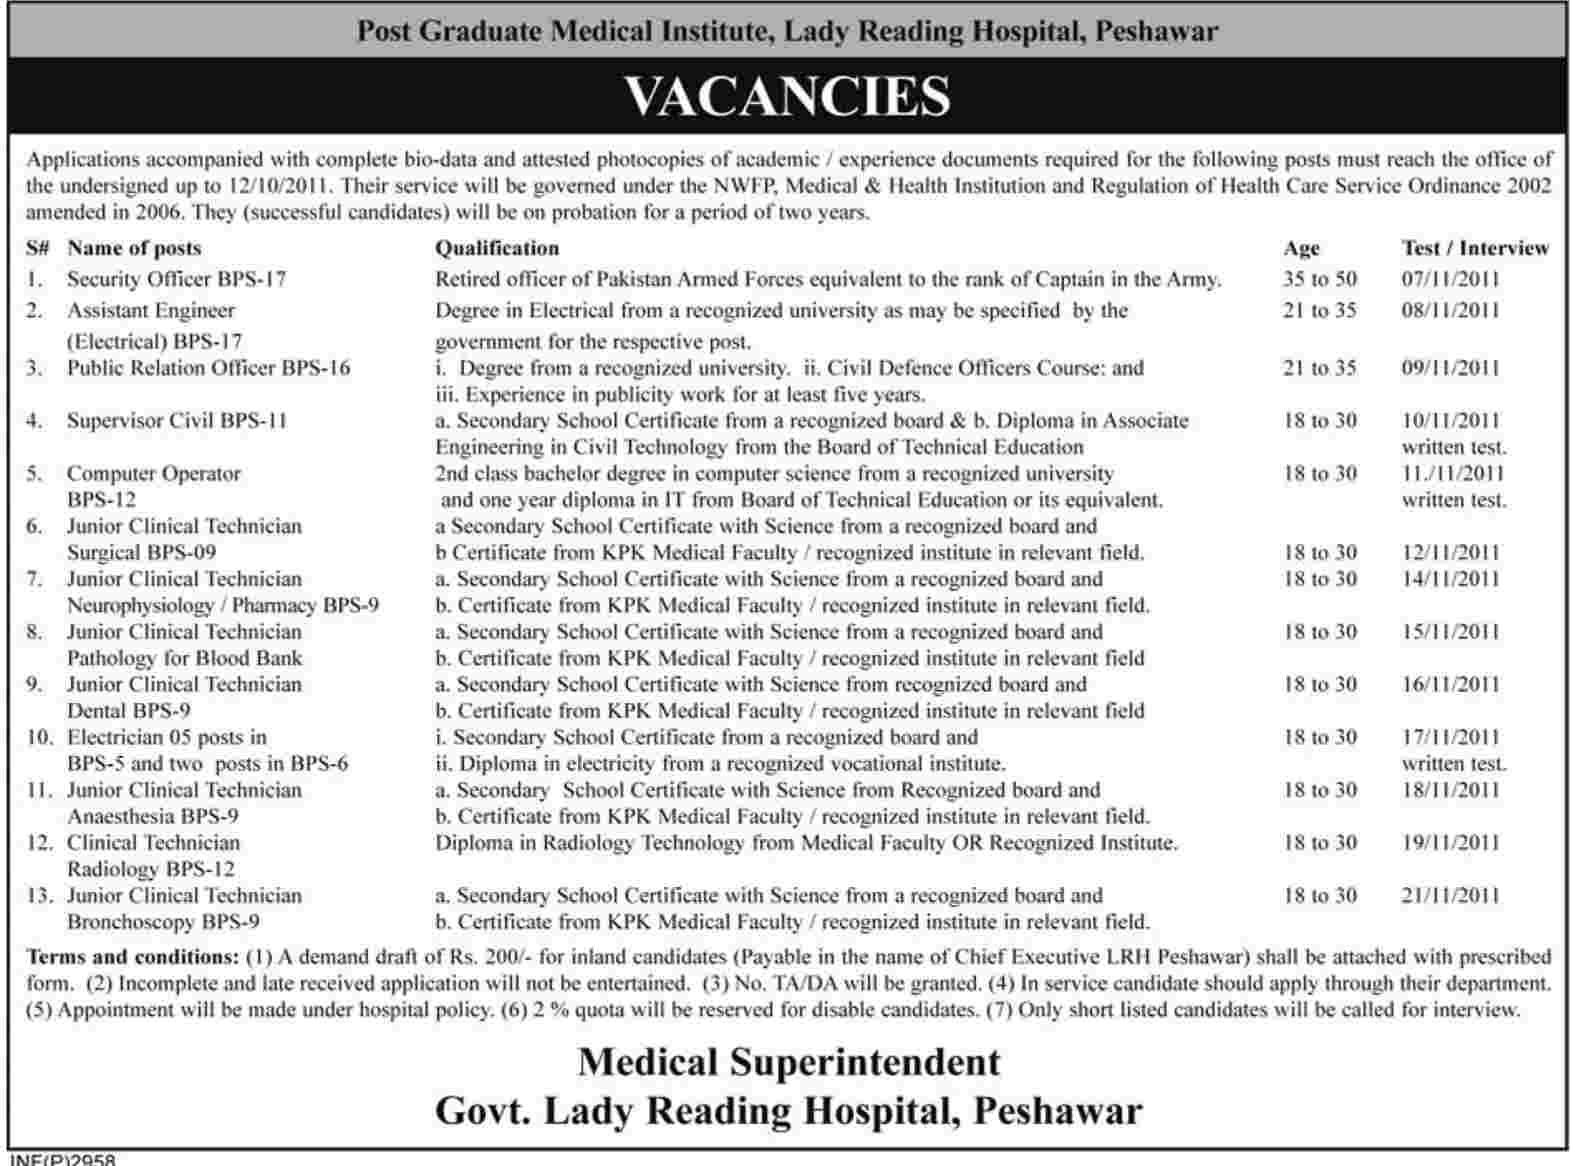 Post Graduation Medical Institute, Lady Reading Hospital Peshawar Positions Vacant